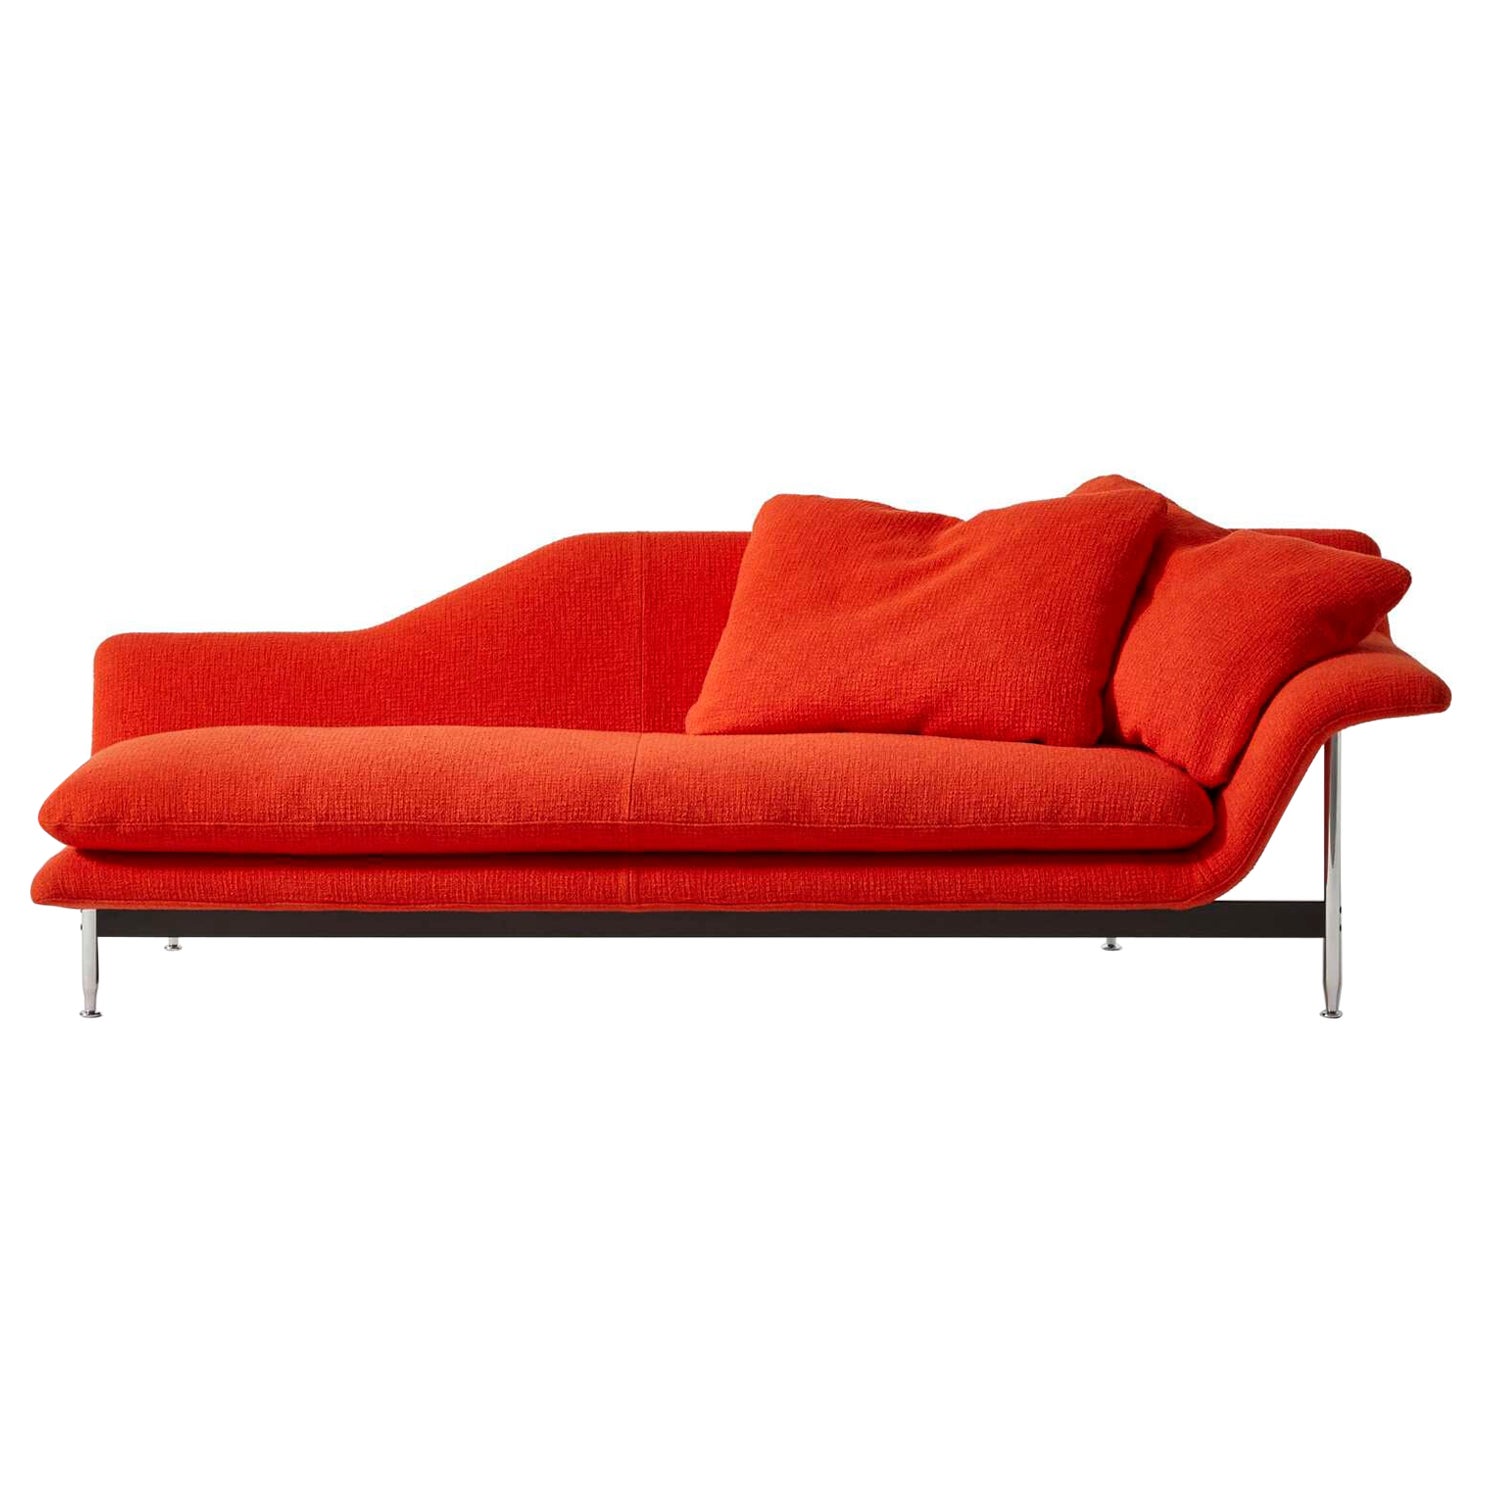 Antonio Citterio Esosoft Sofa by Cassina in red, magenta or white  For Sale